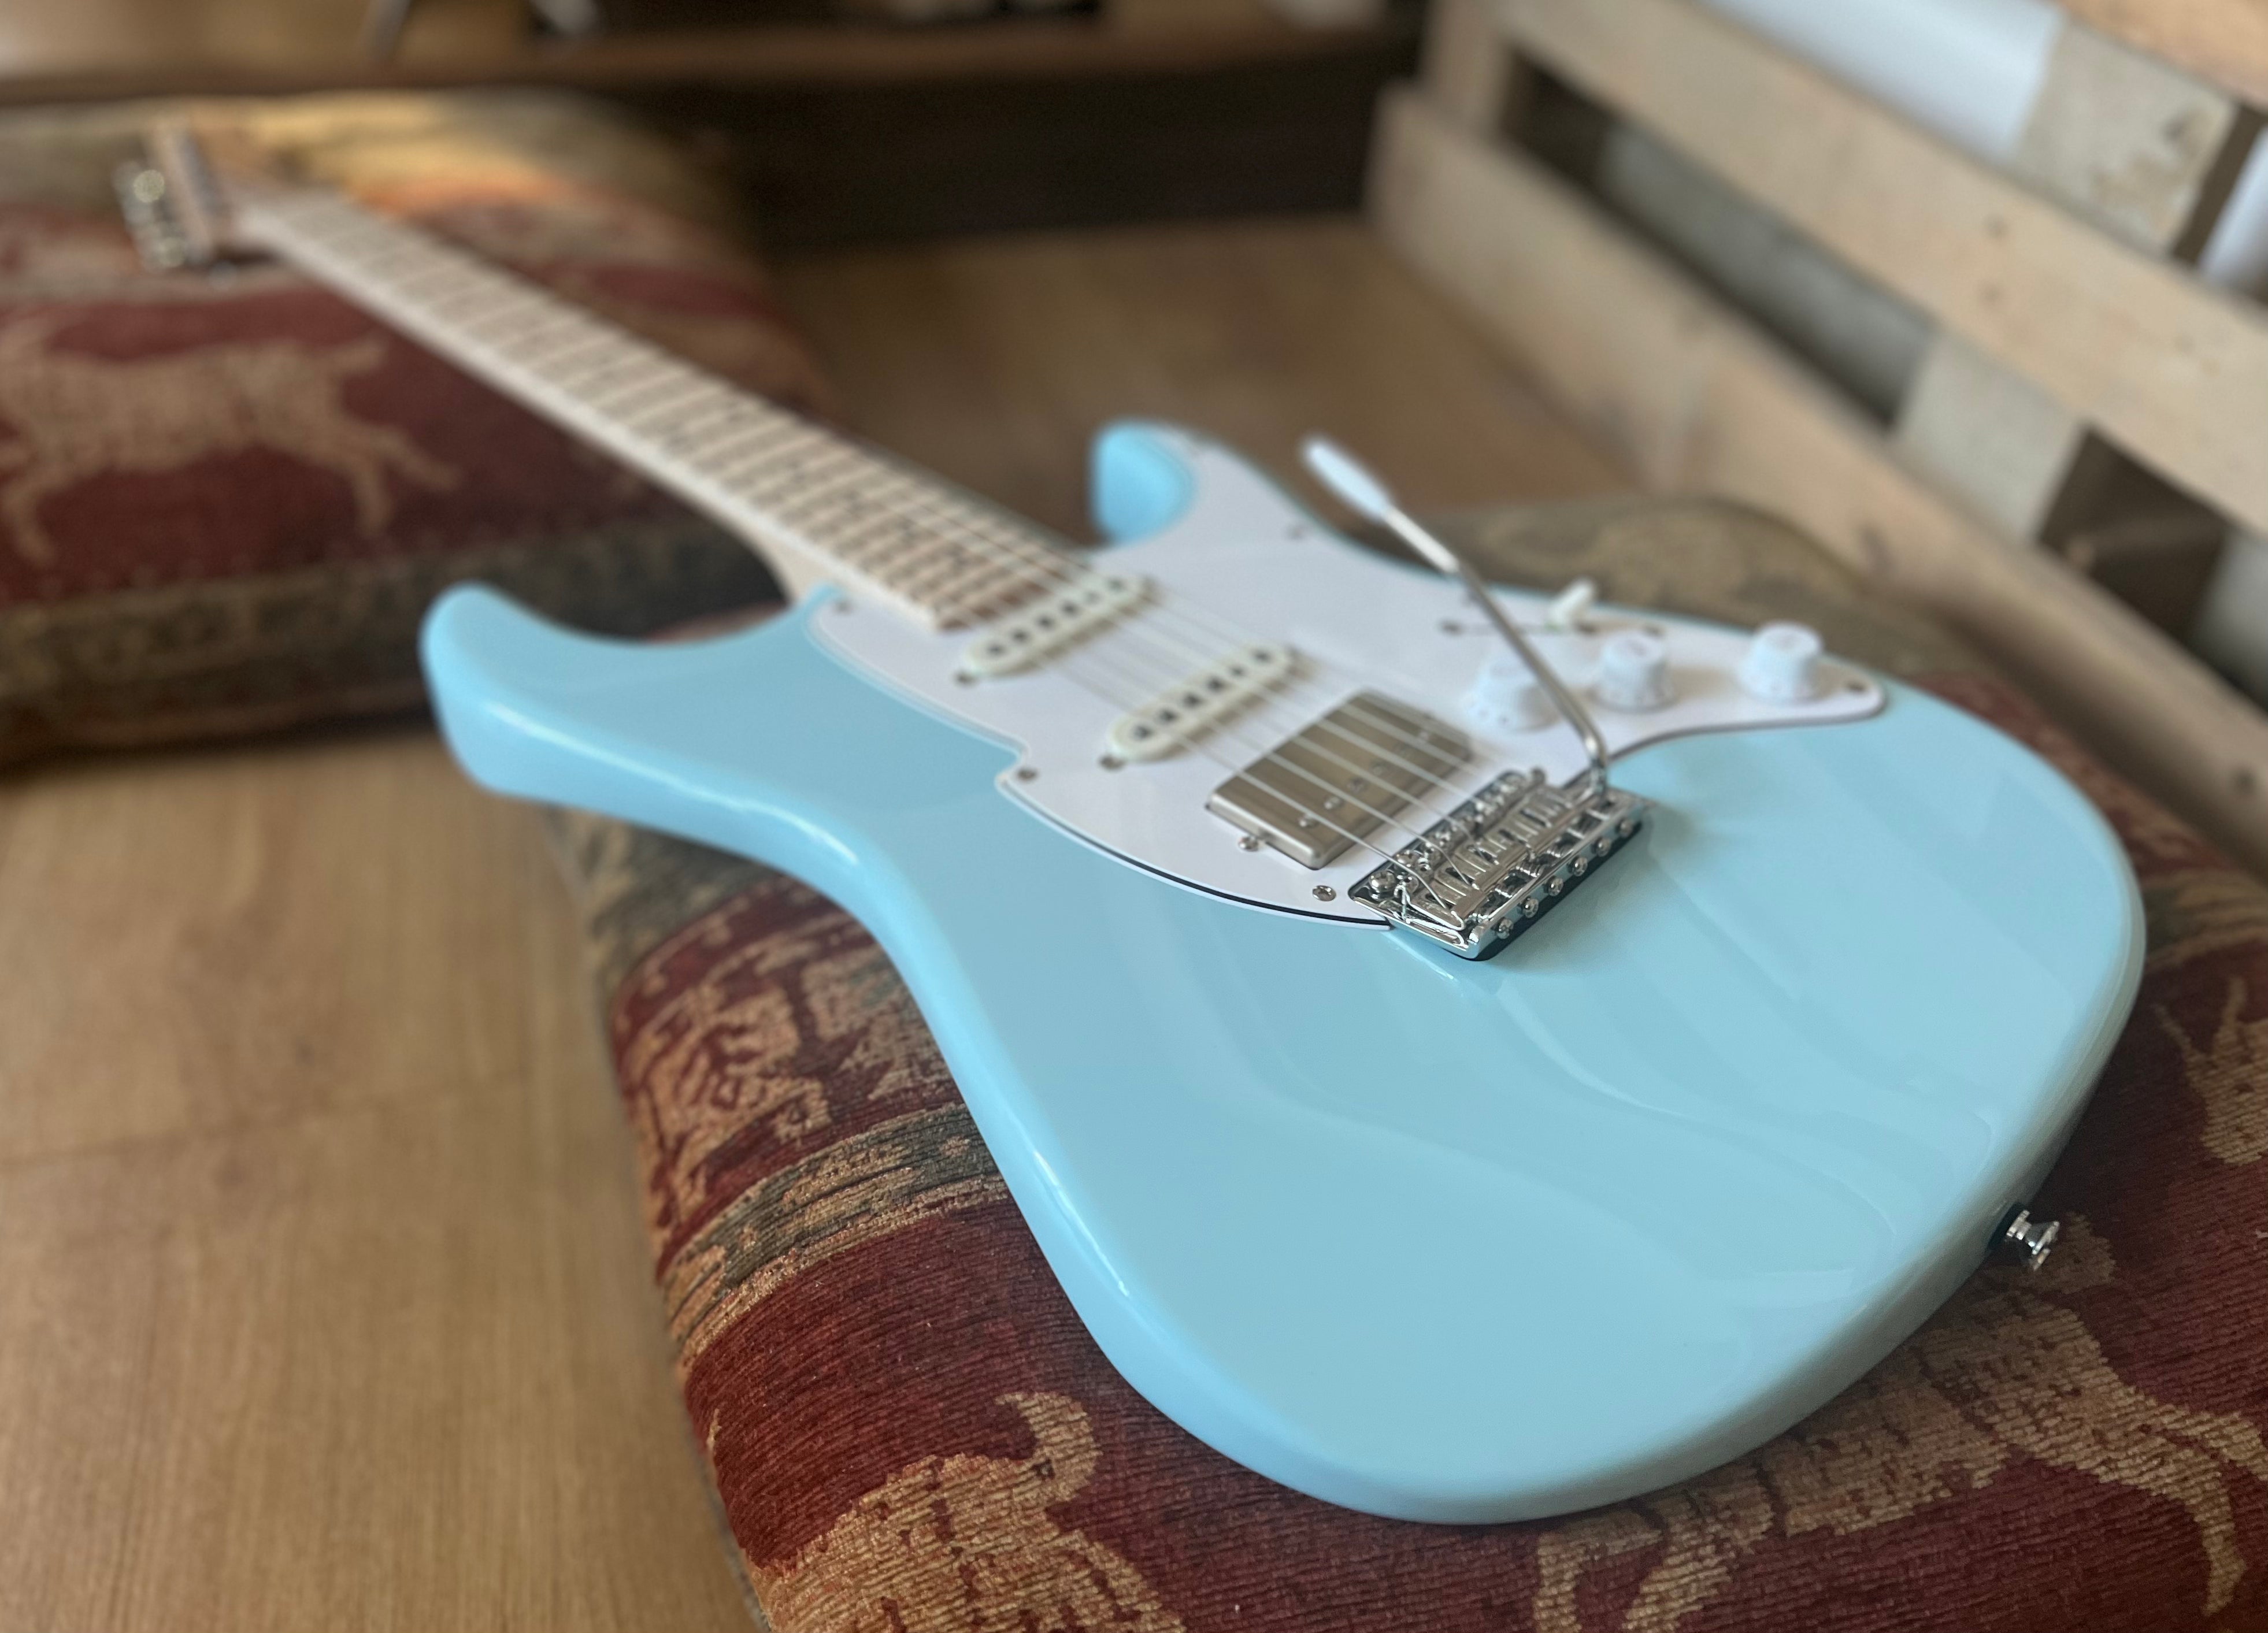 FRET KING CORONA CLASSIC GUITAR - LAGUNA BLUE  (Includes Our £85 Pro Setup Free), Electric Guitar for sale at Richards Guitars.